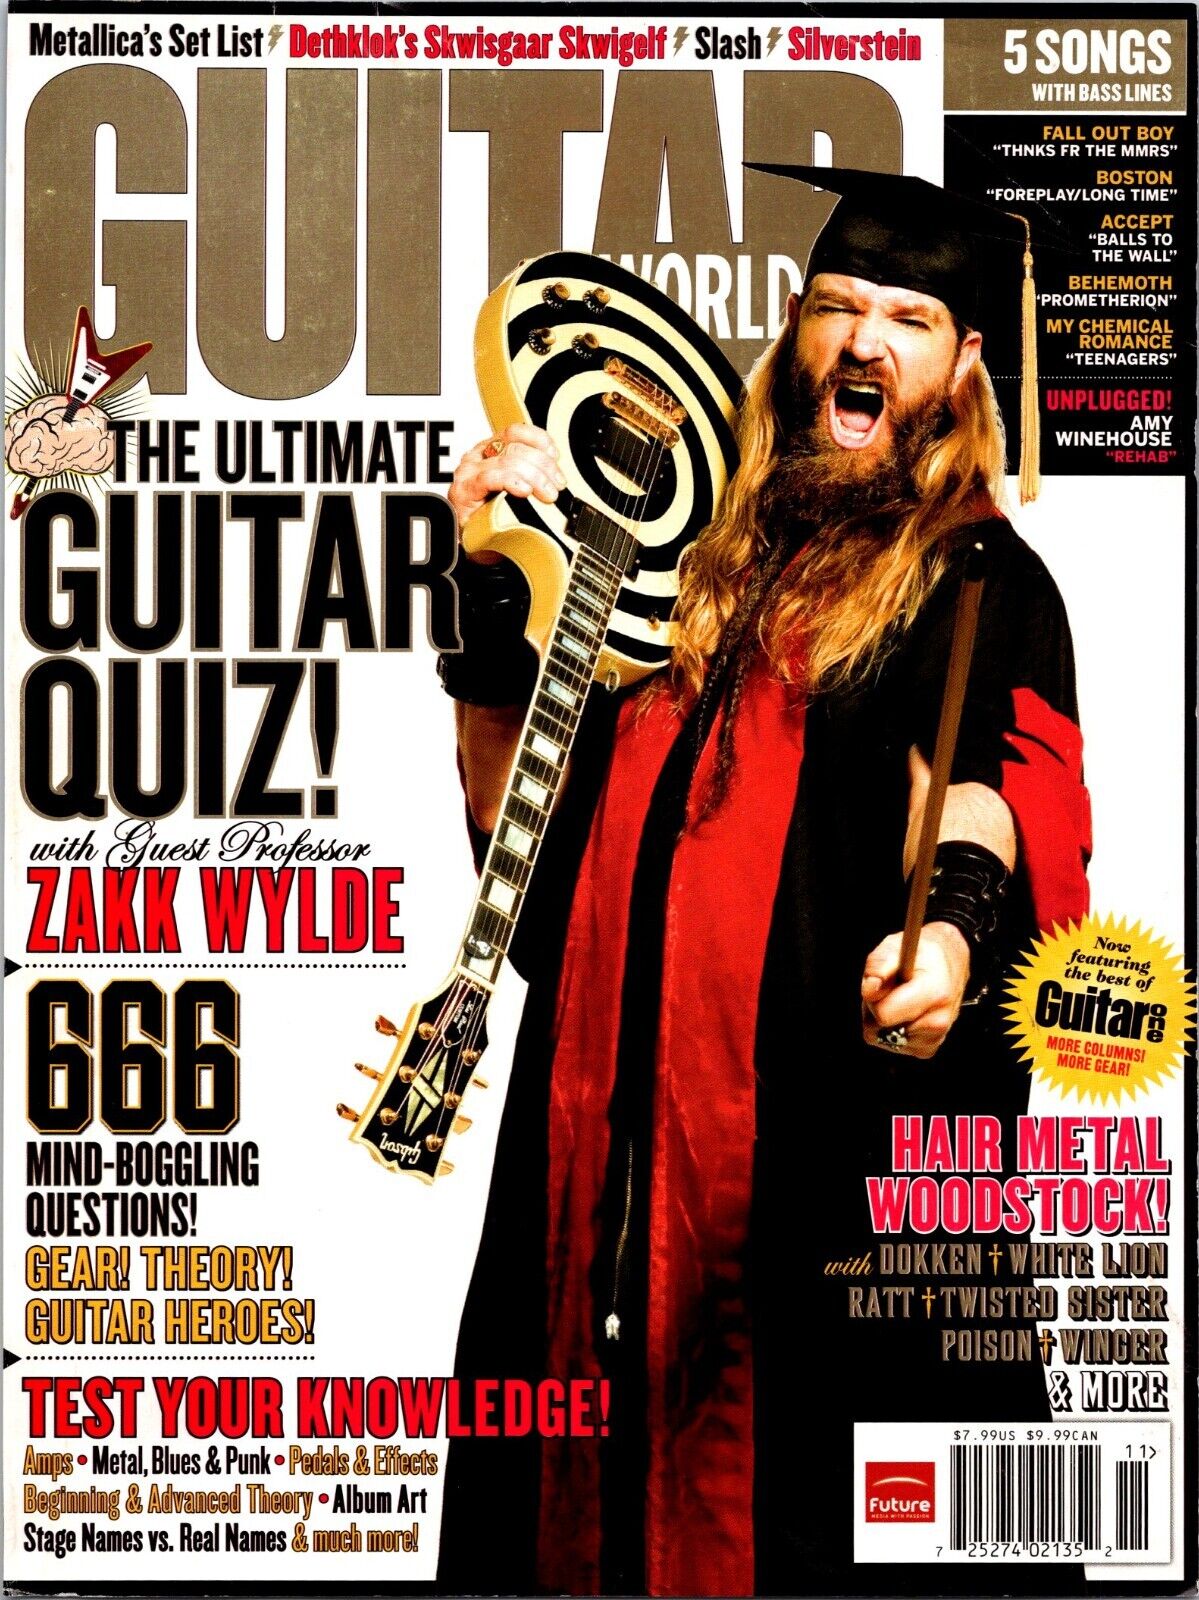 Guitar World Cover Guitar Quiz Original Print Ad